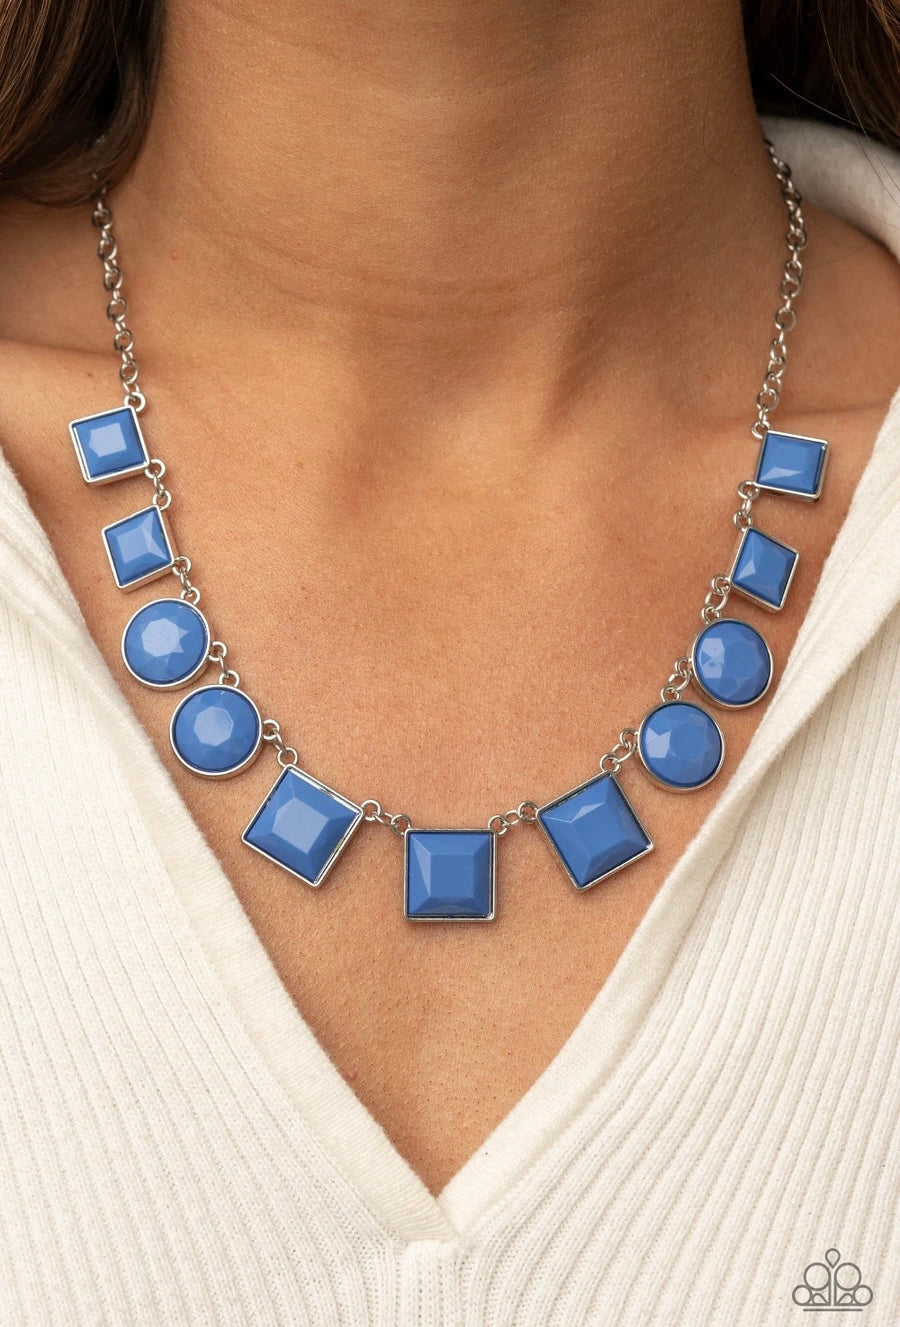 Paparazzi “Tic Tac TREND” Blue Necklace Earring Set